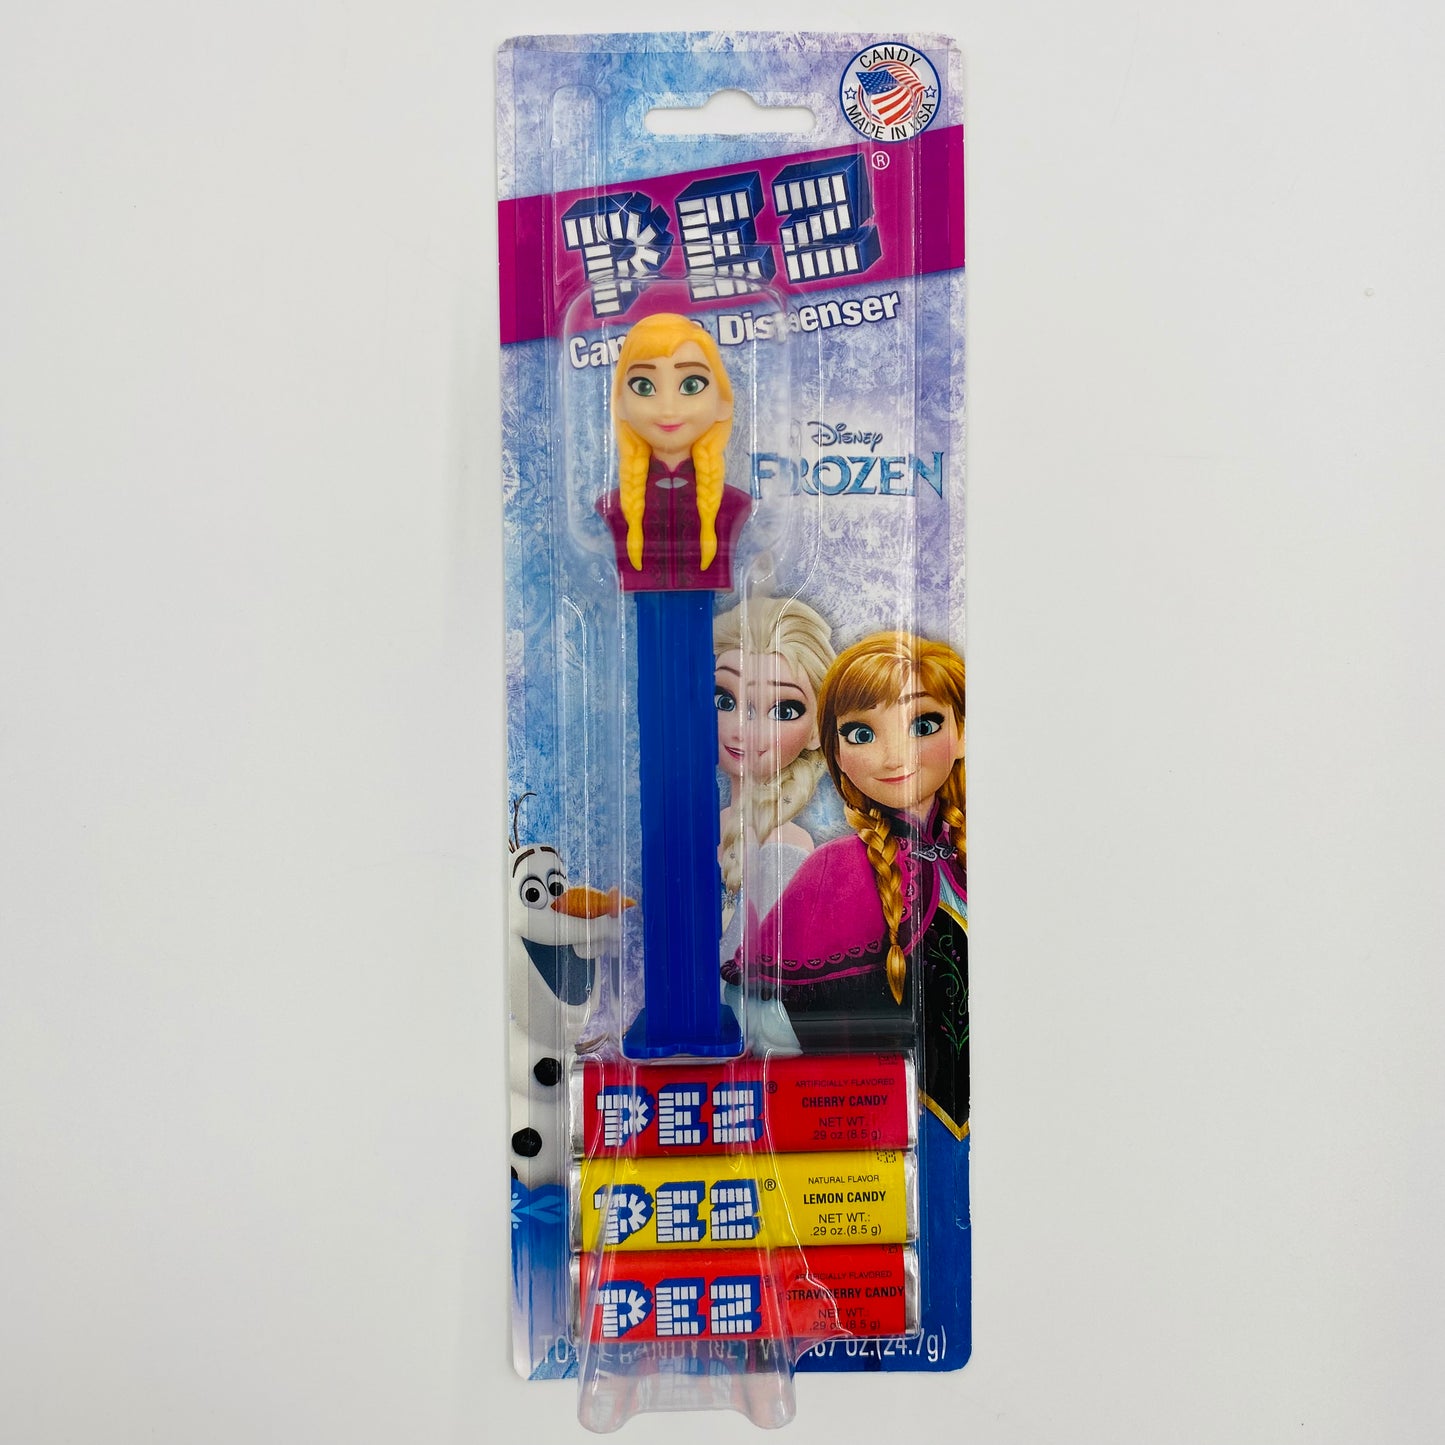 Frozen Anna PEZ dispenser (2014) carded